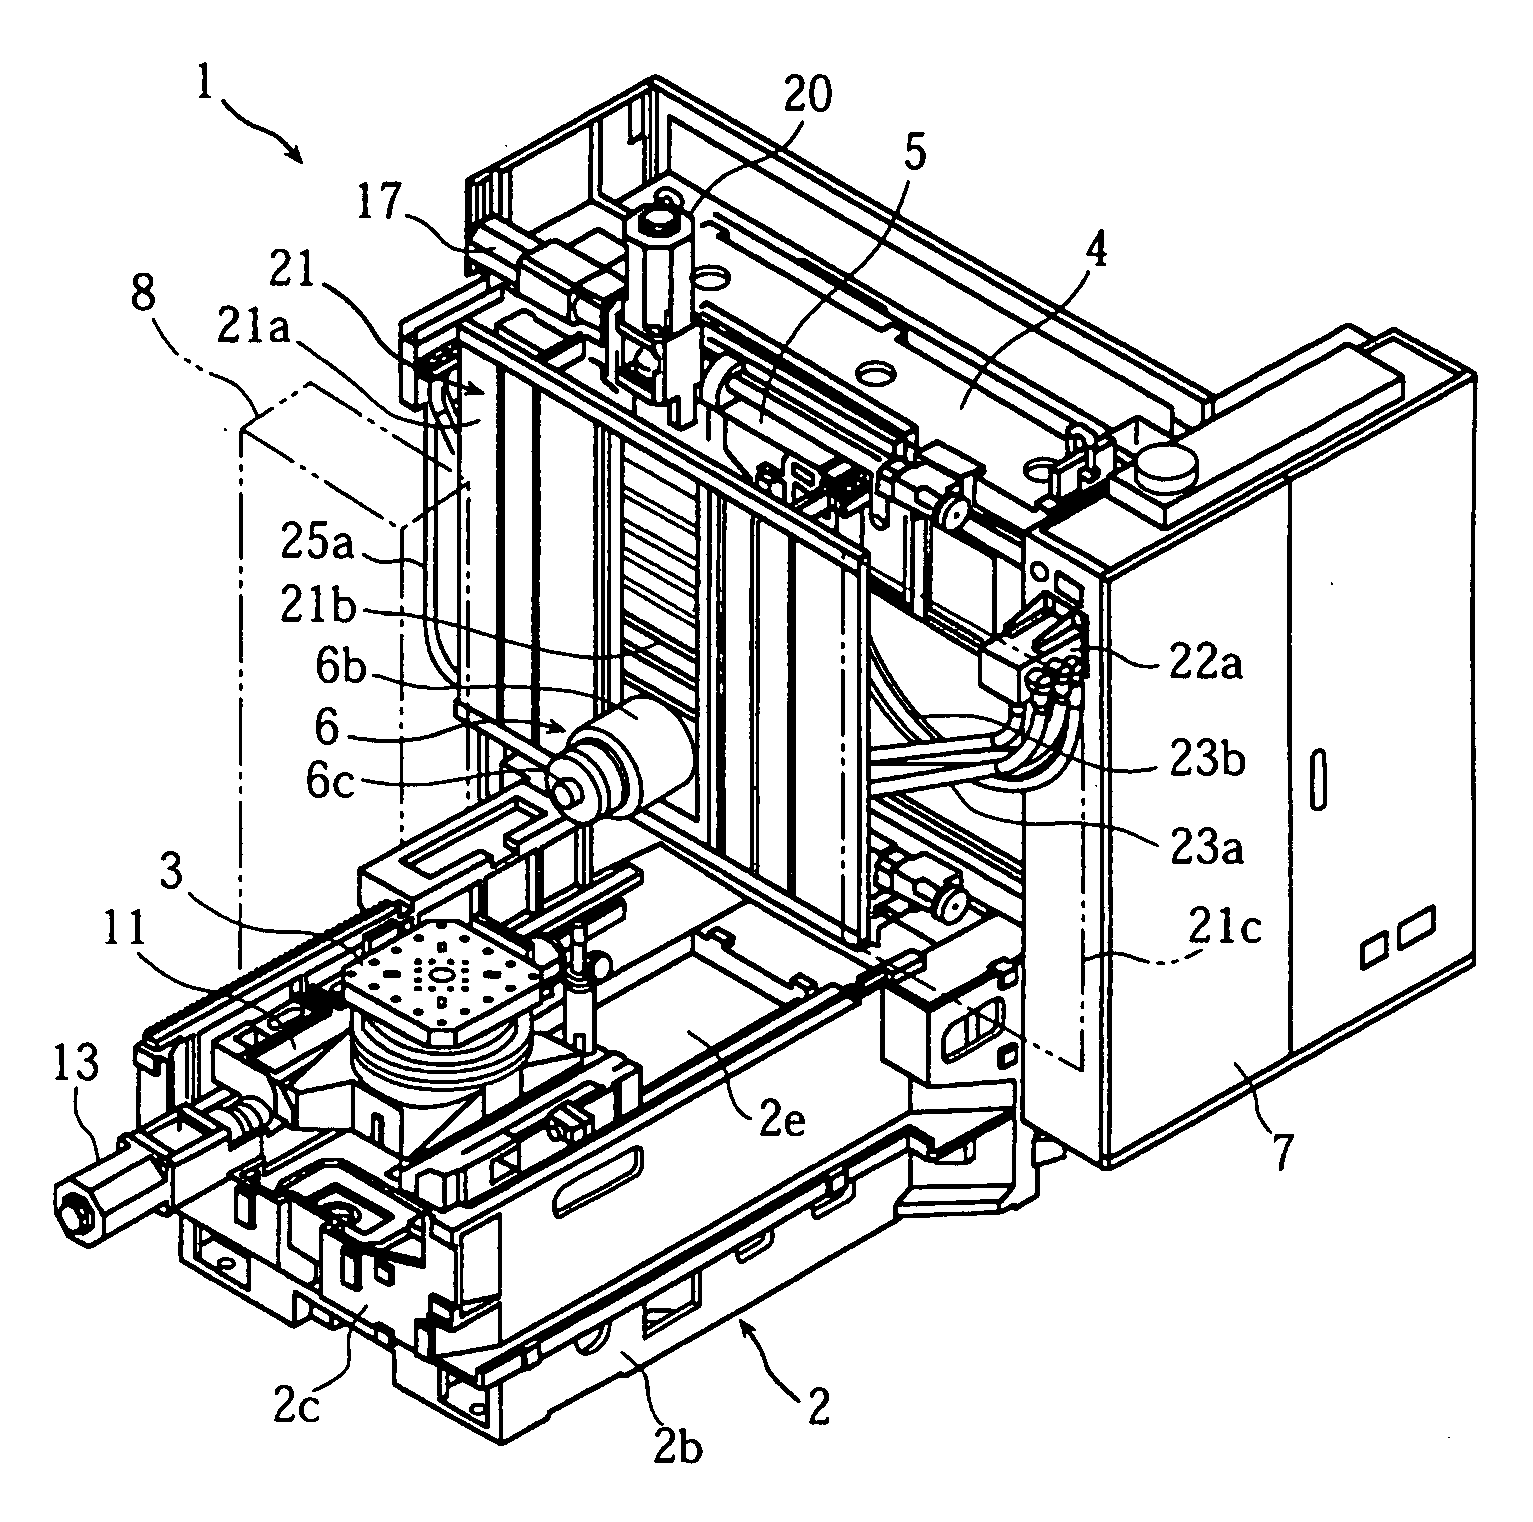 Arrangement structure of machine tool